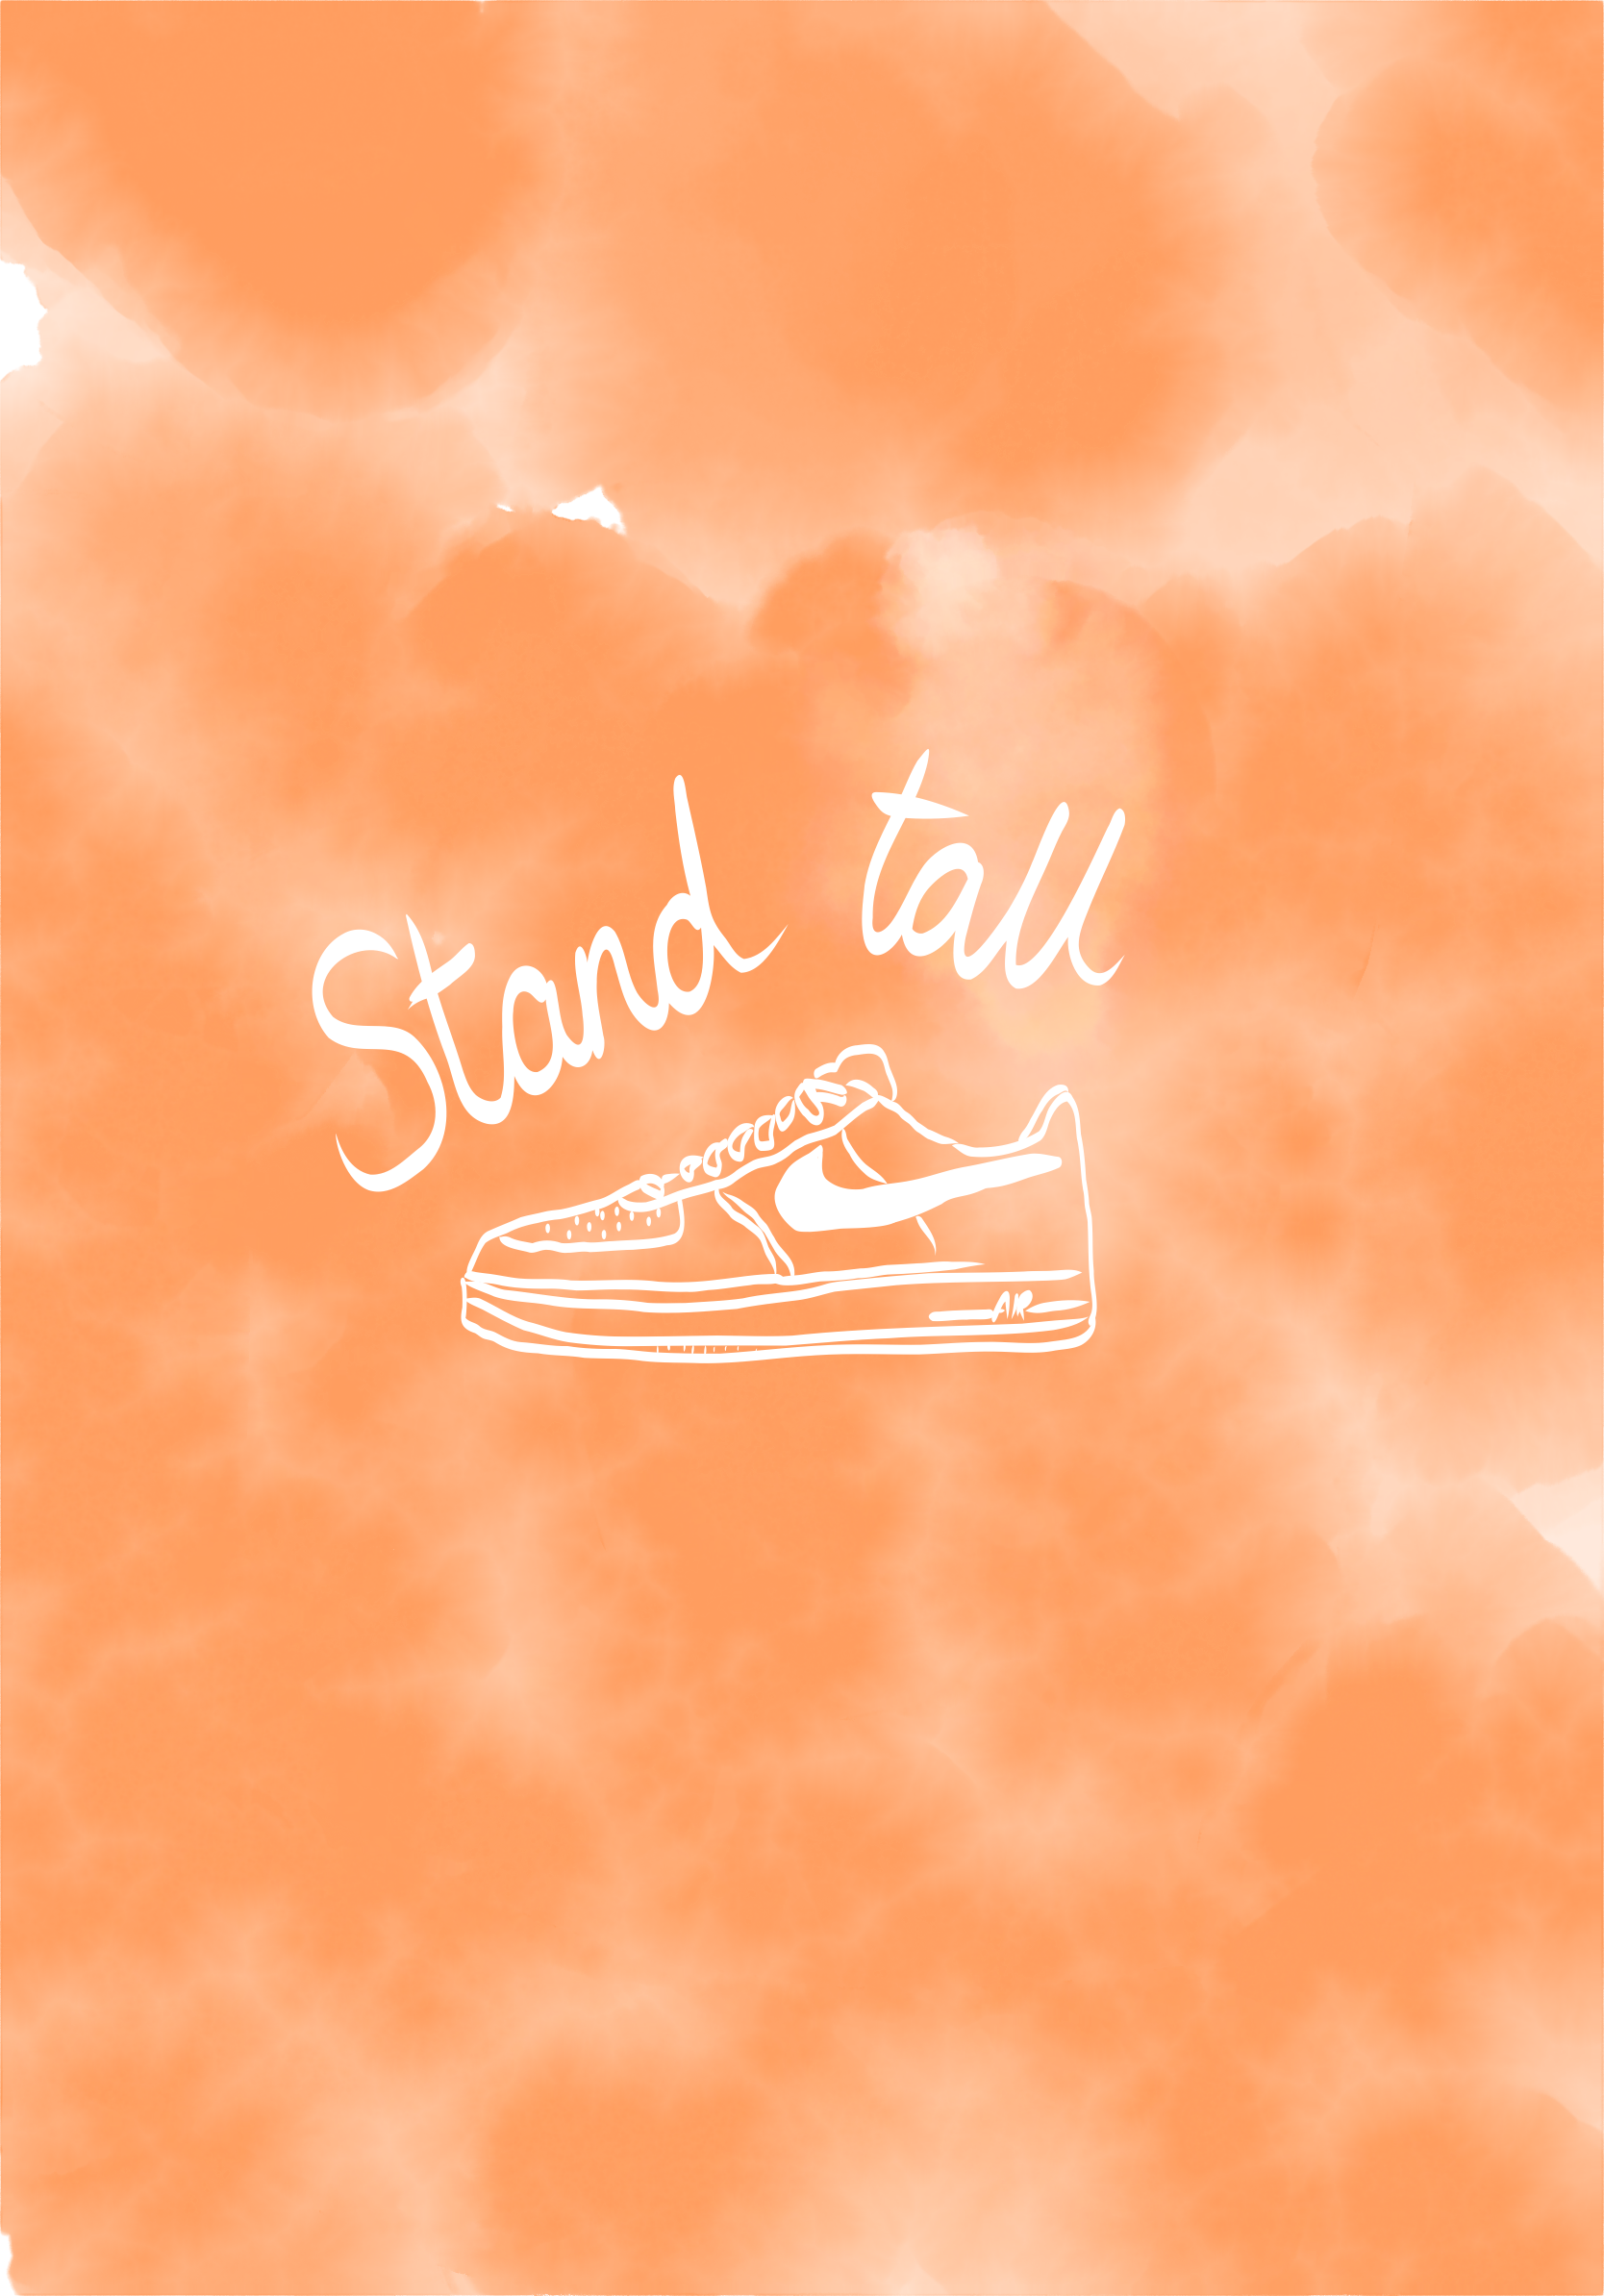 Stand Tall by Tariq